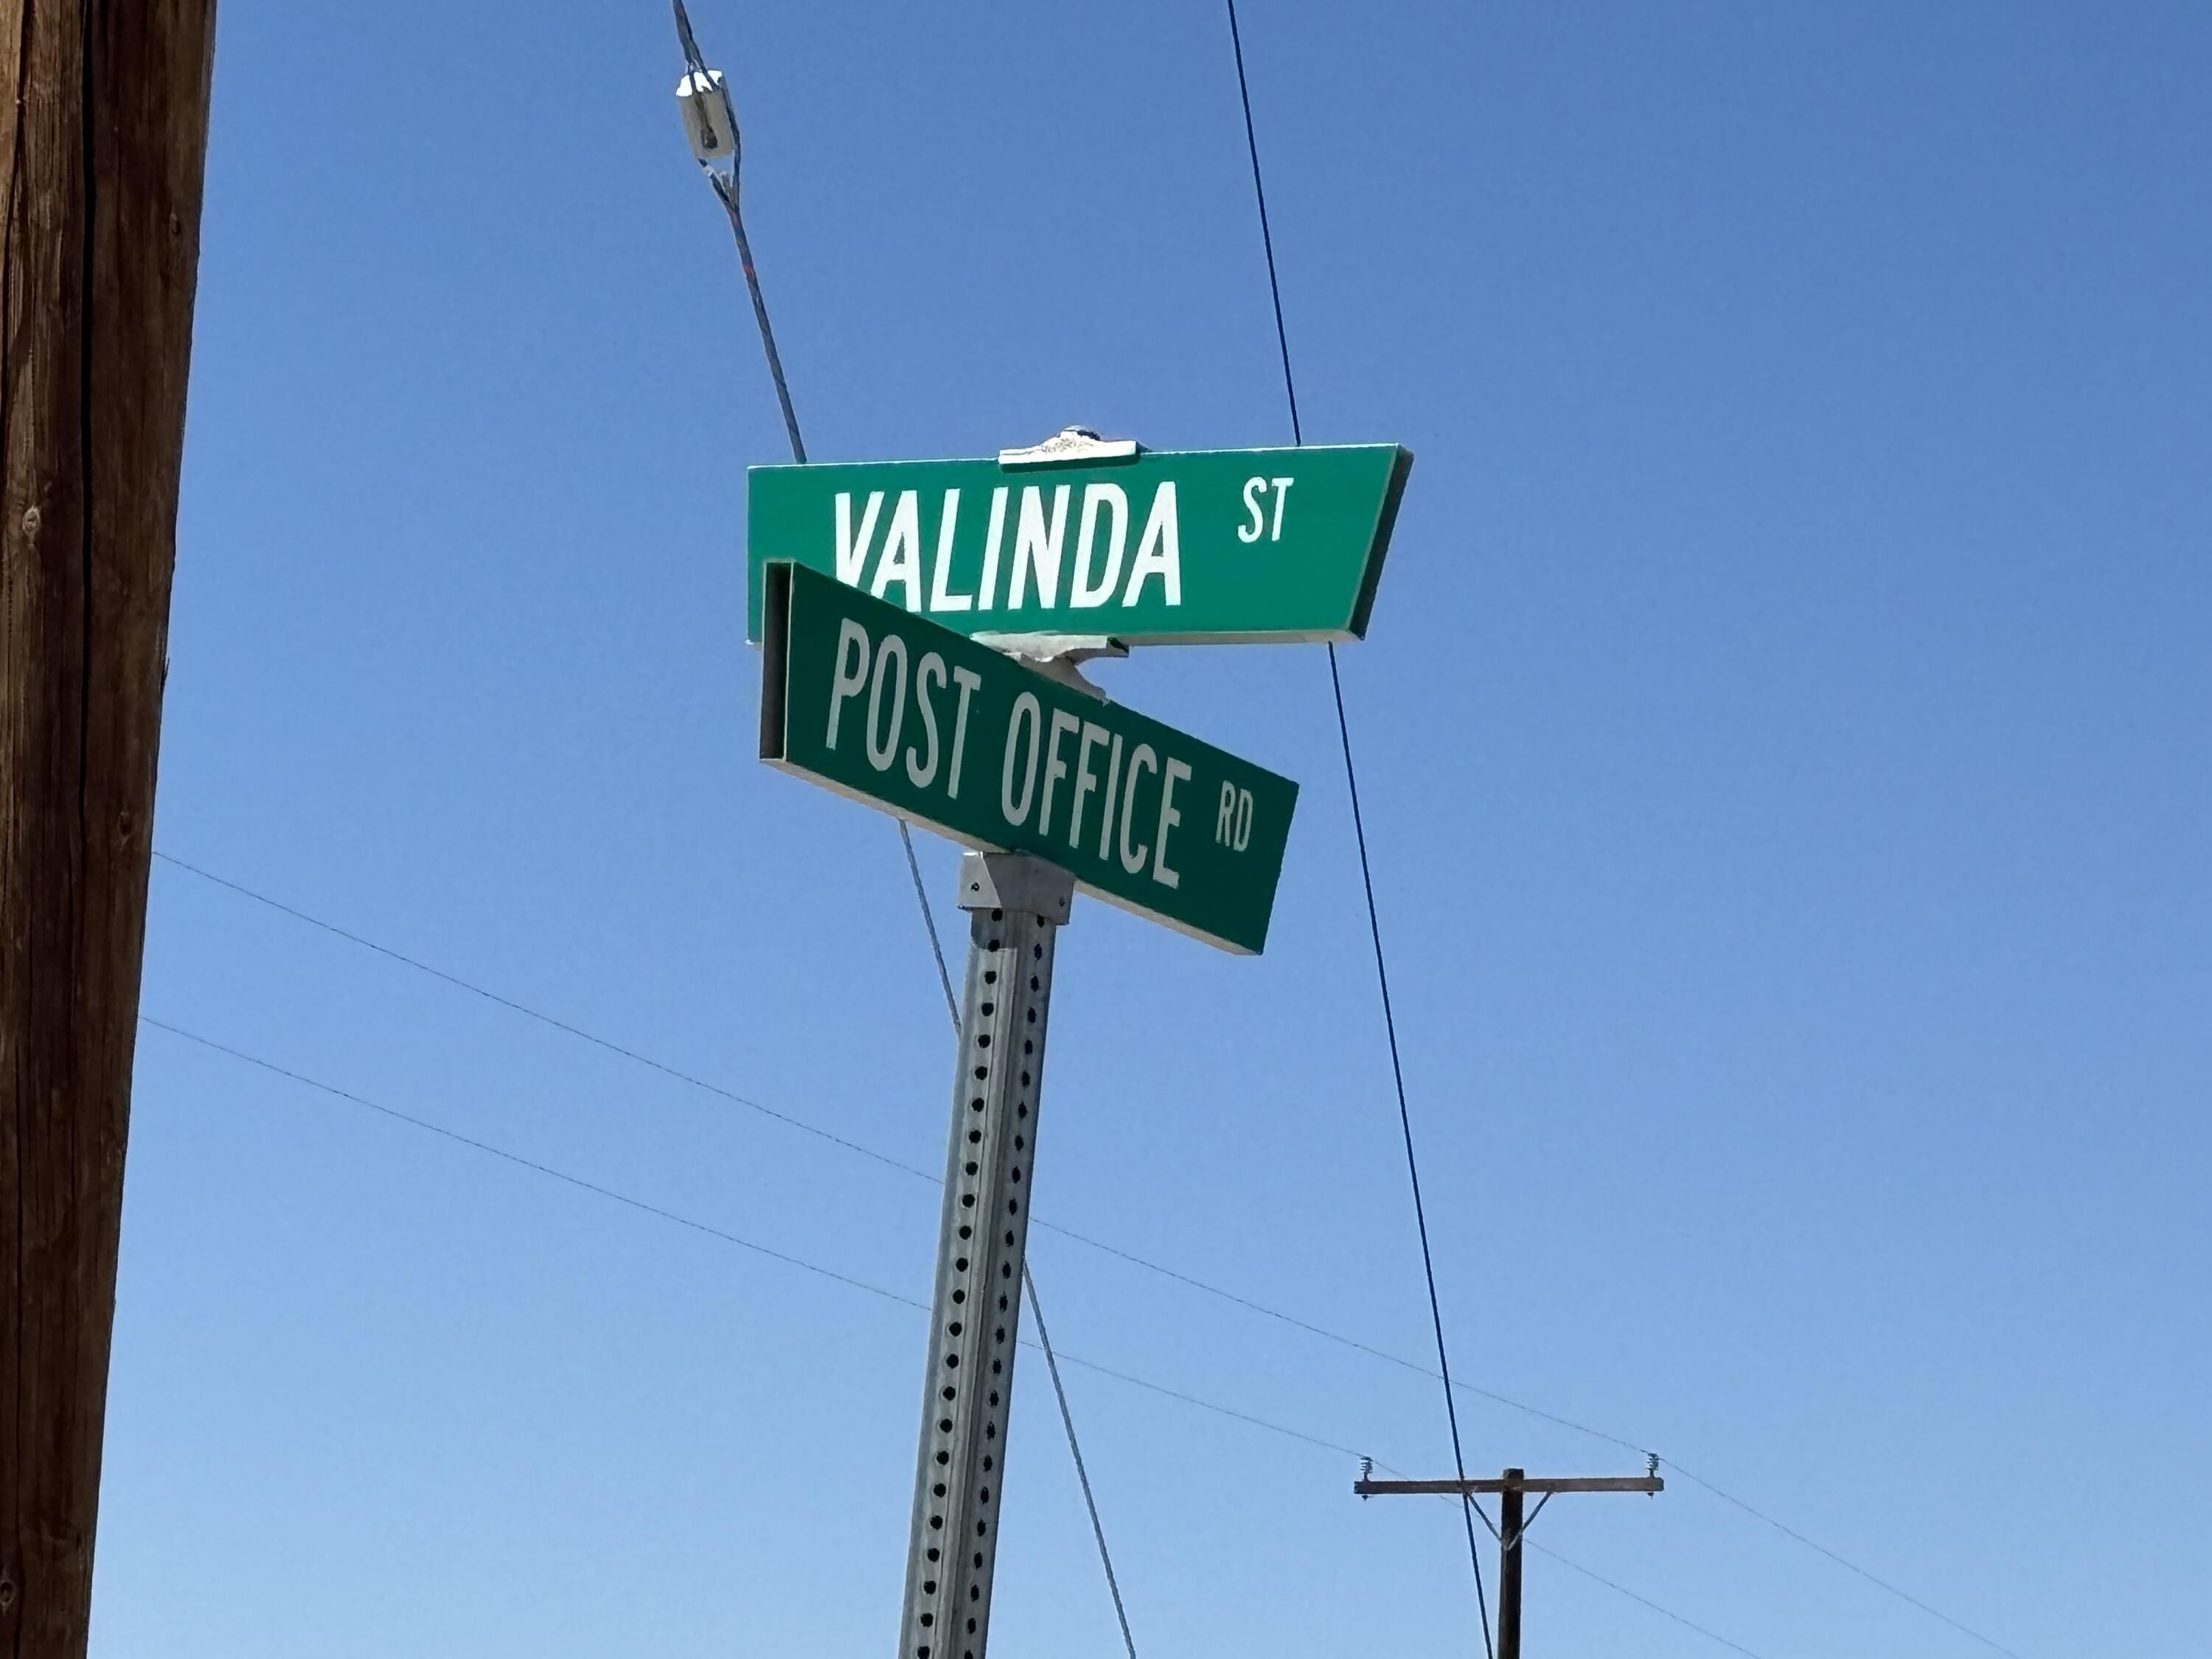 2. Valinda Street